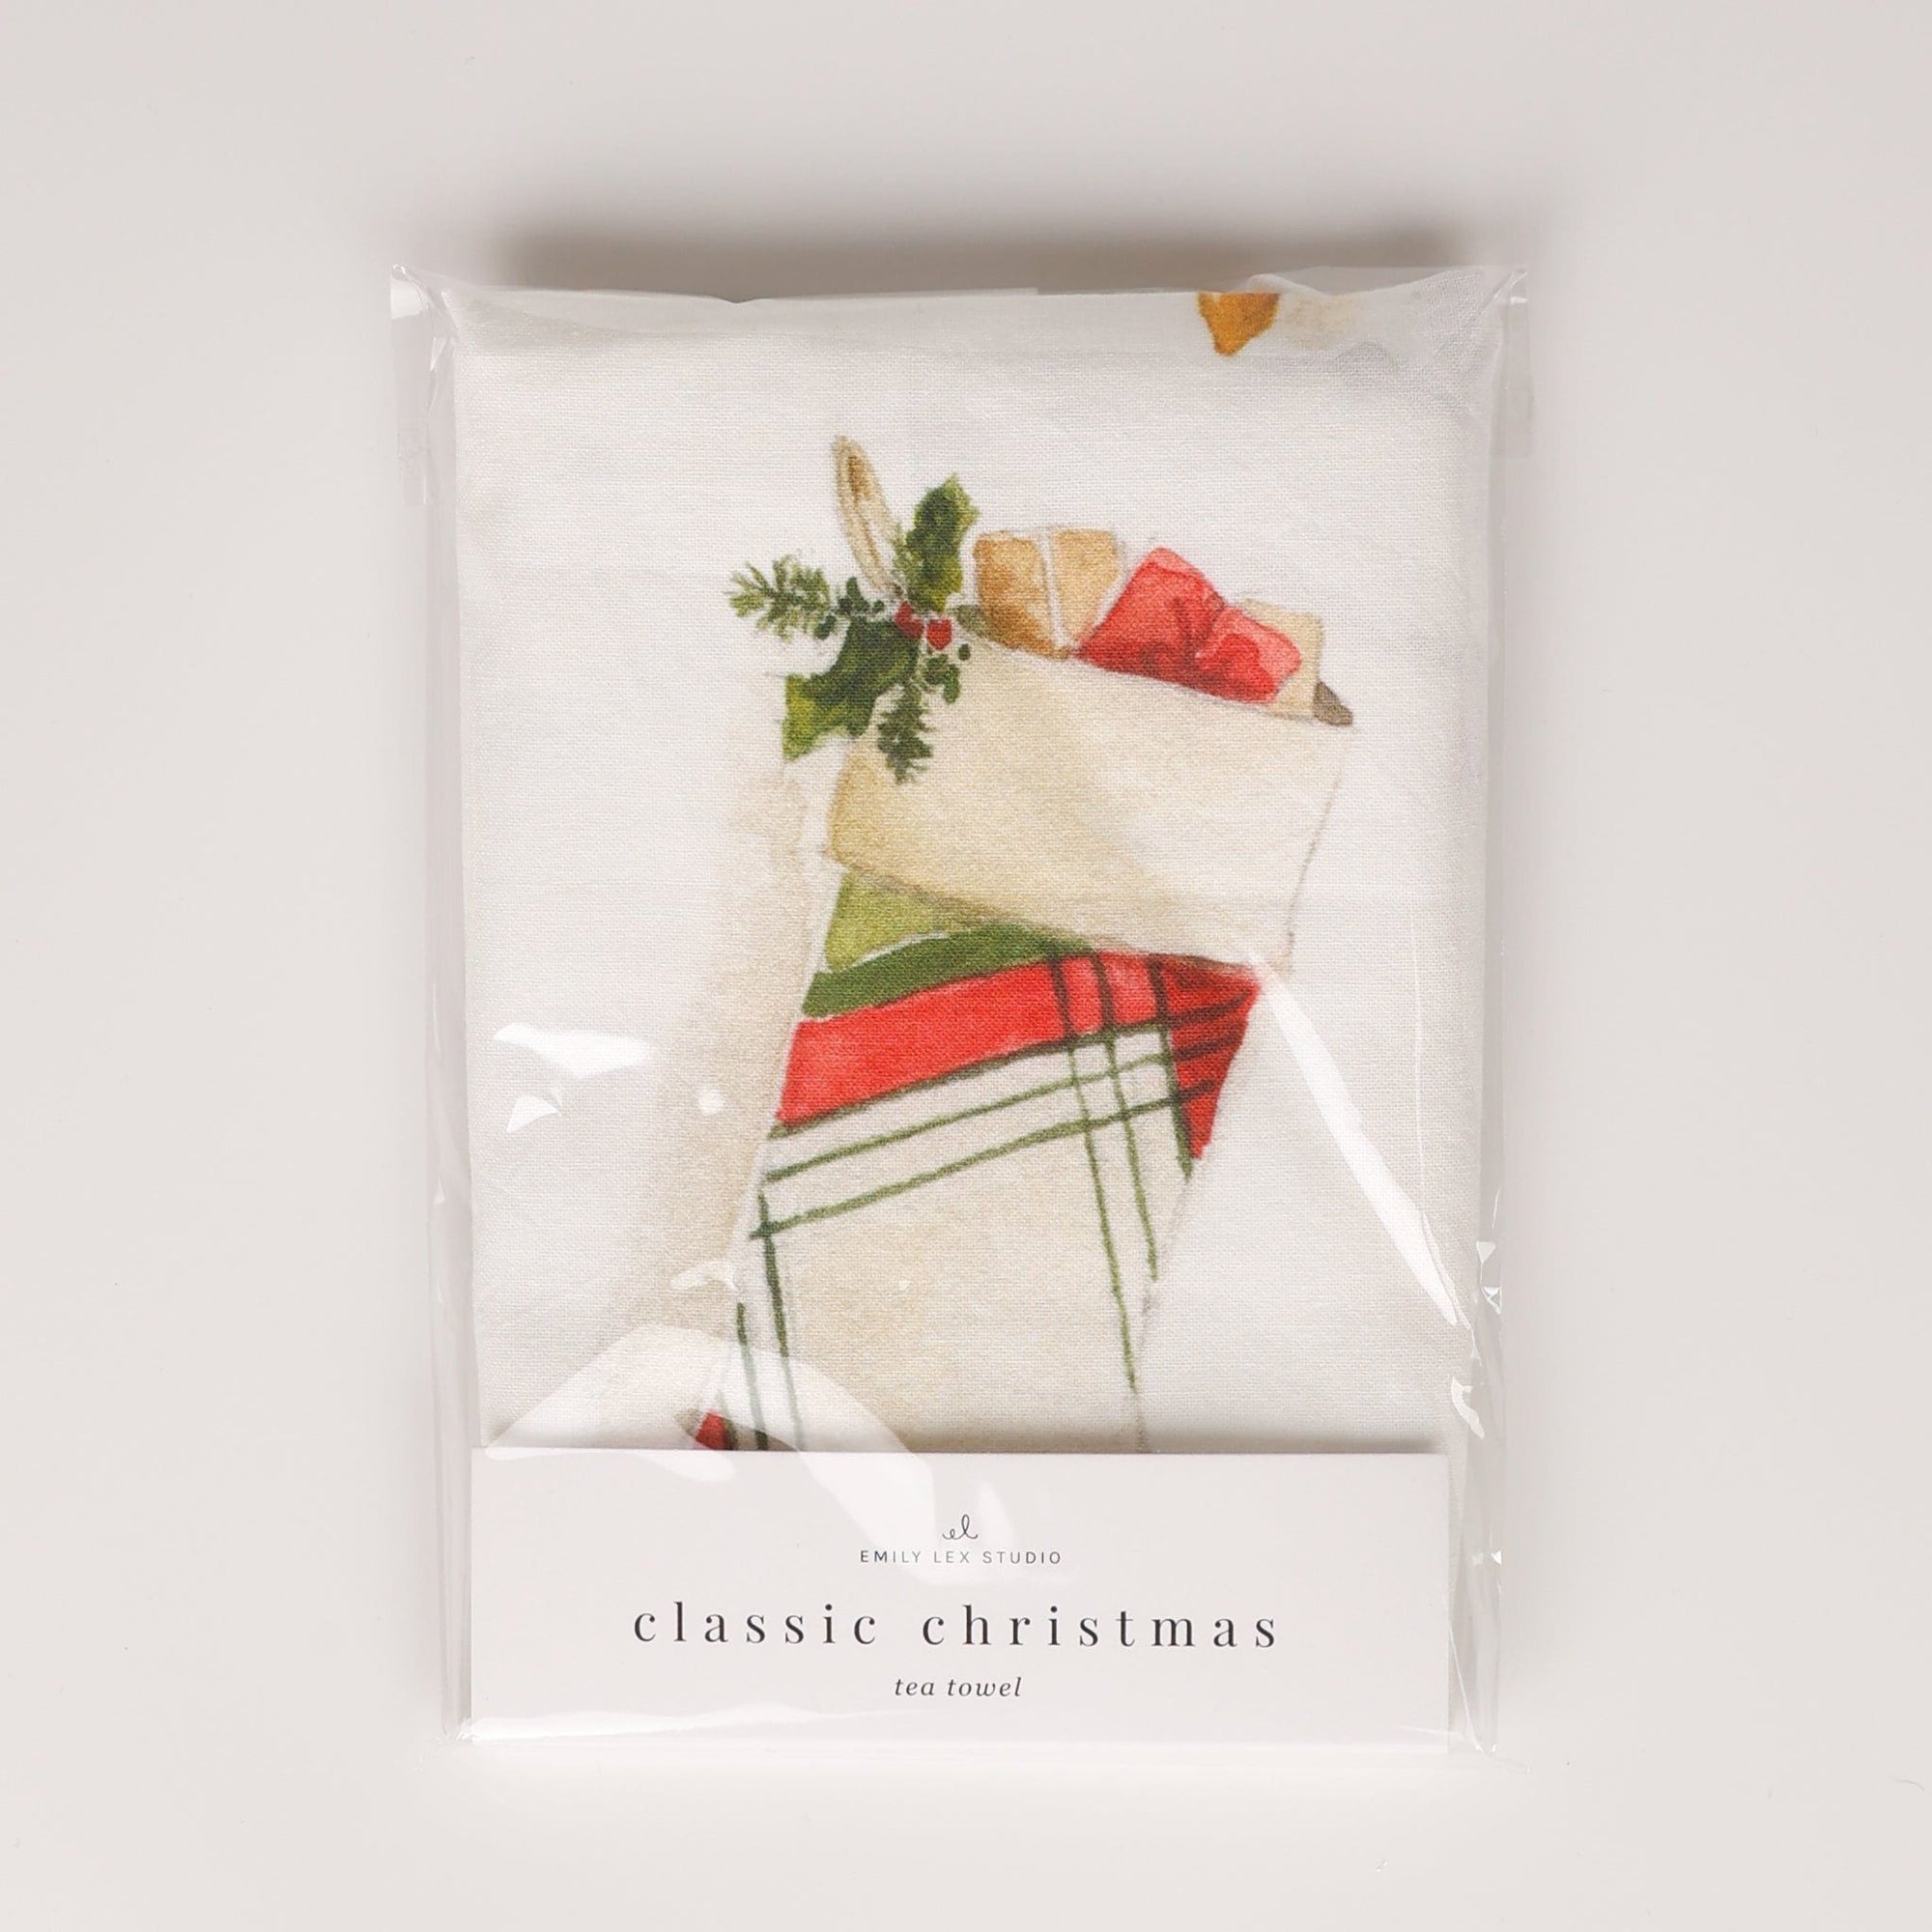 classic christmas tea towel - emily lex studio